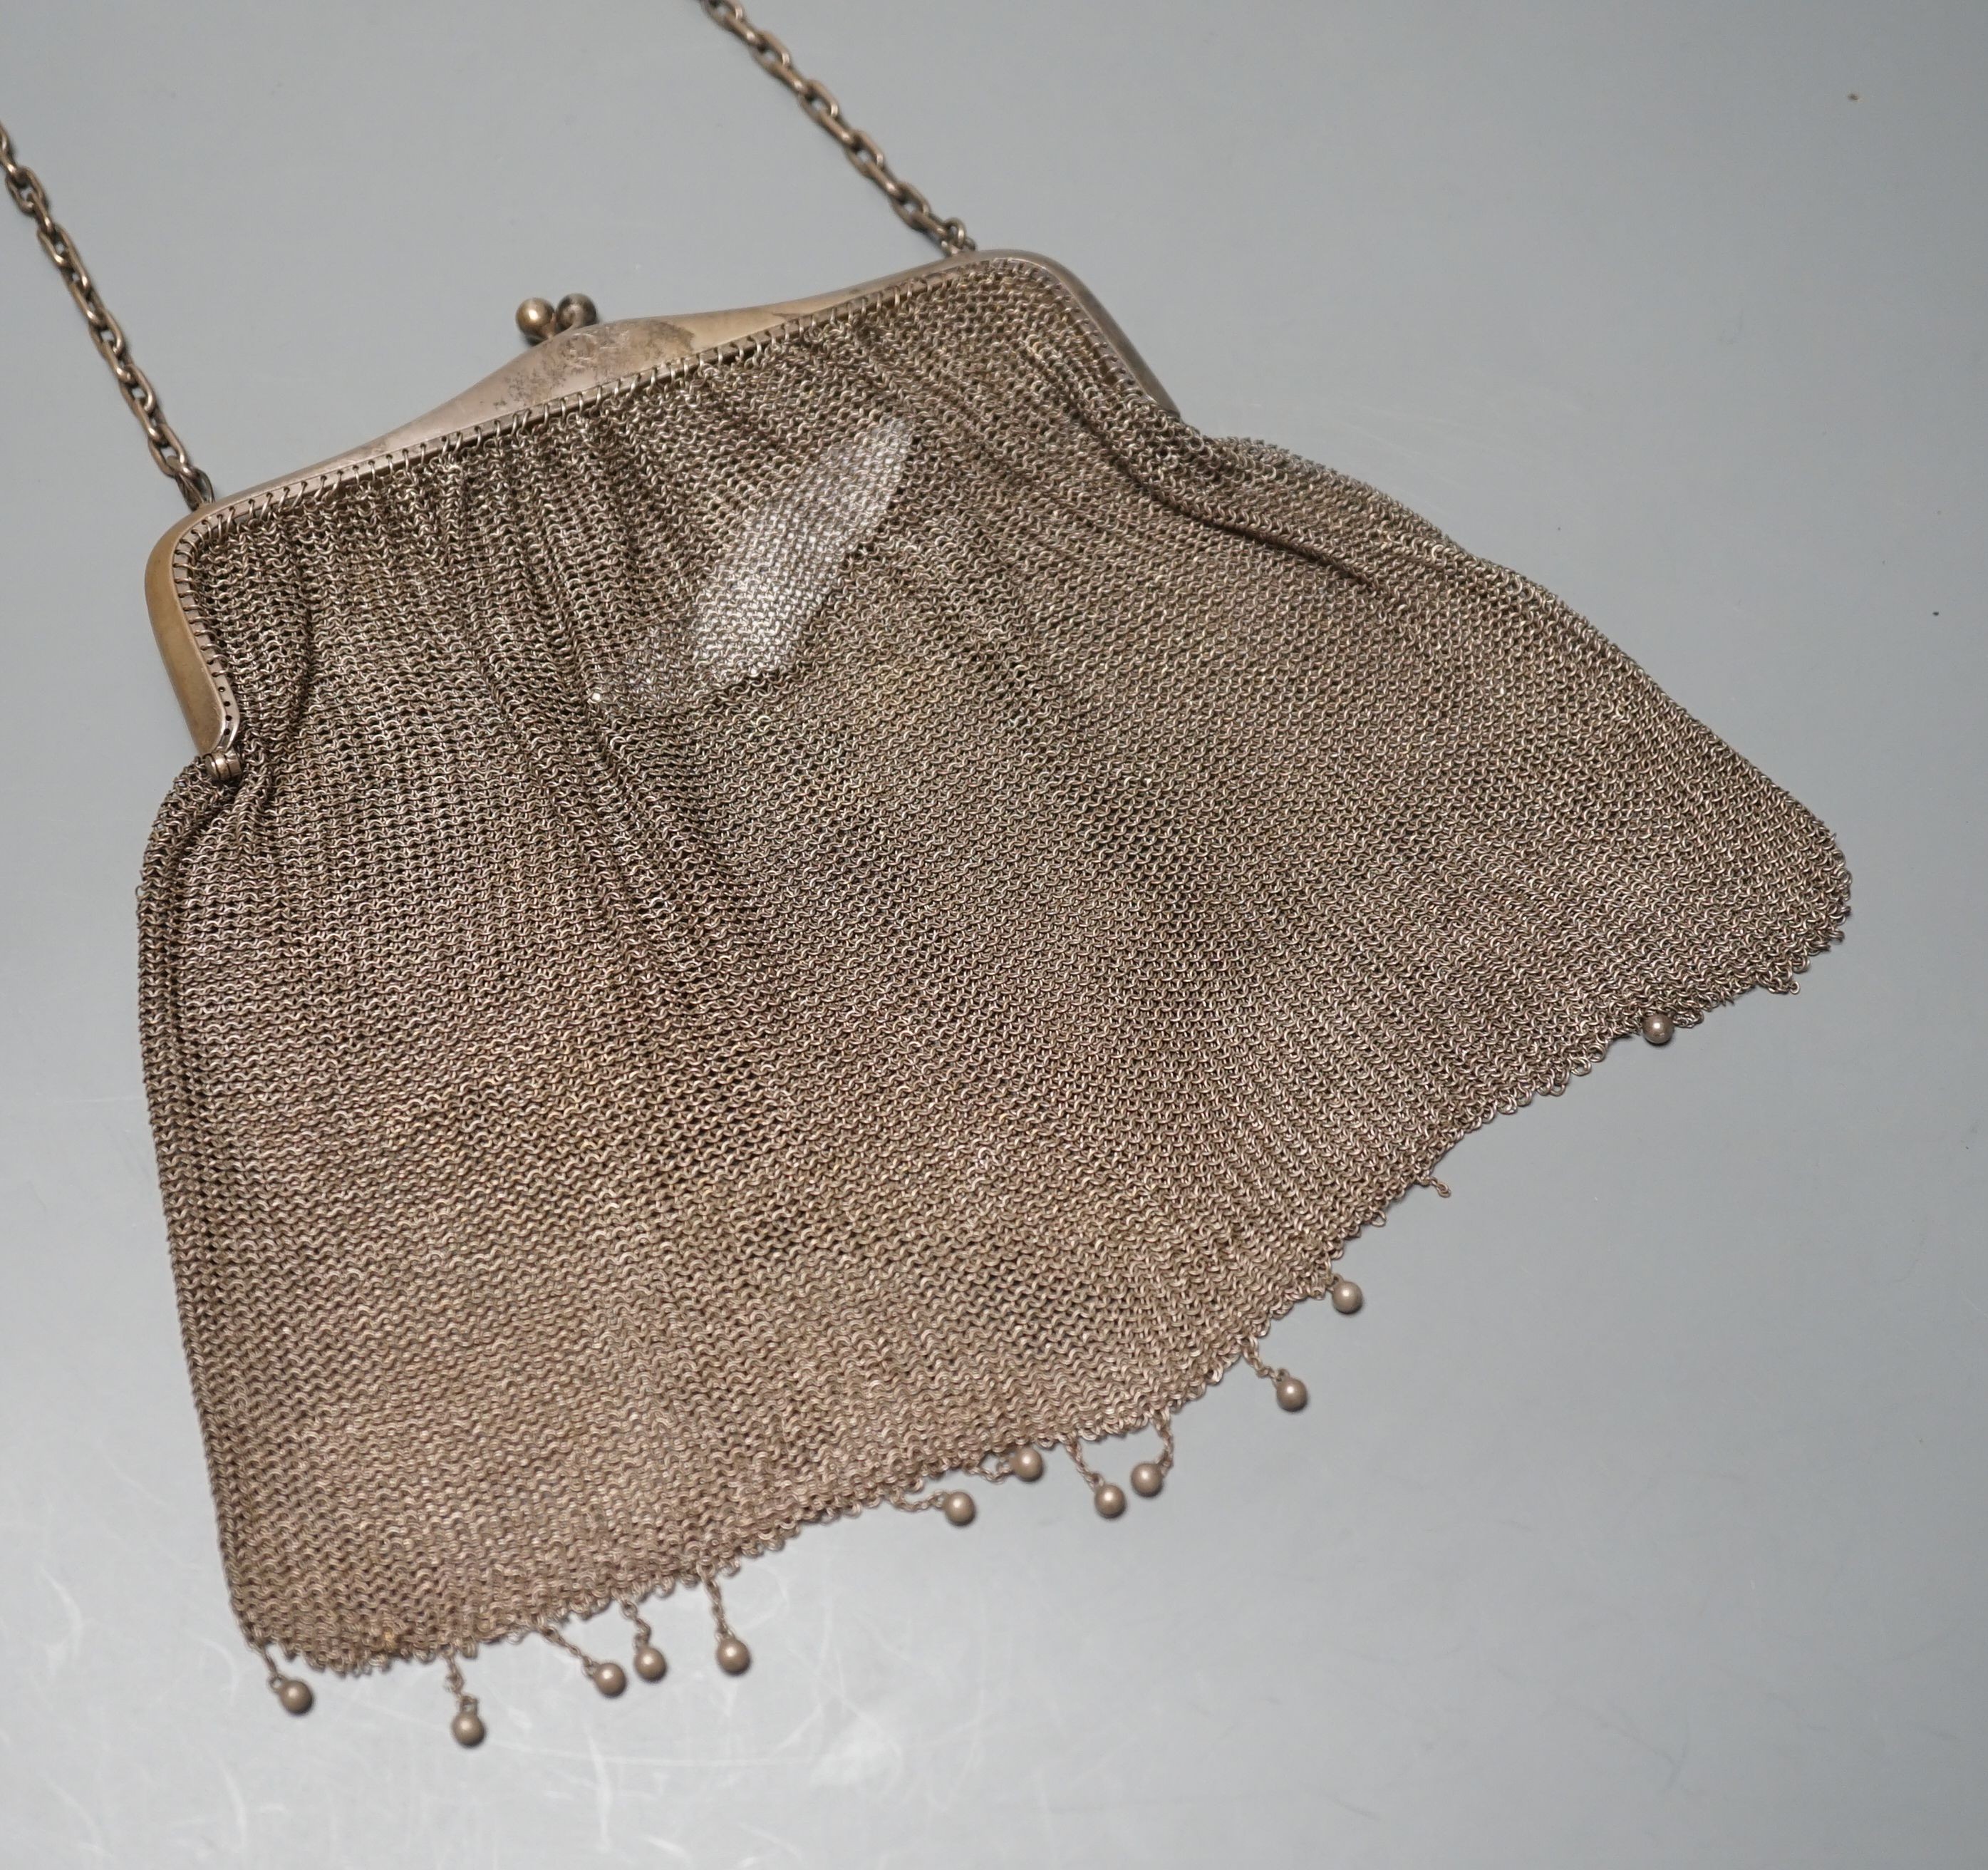 A George V silver mesh evening bag, import marks for London, 1912, 11.5oz.